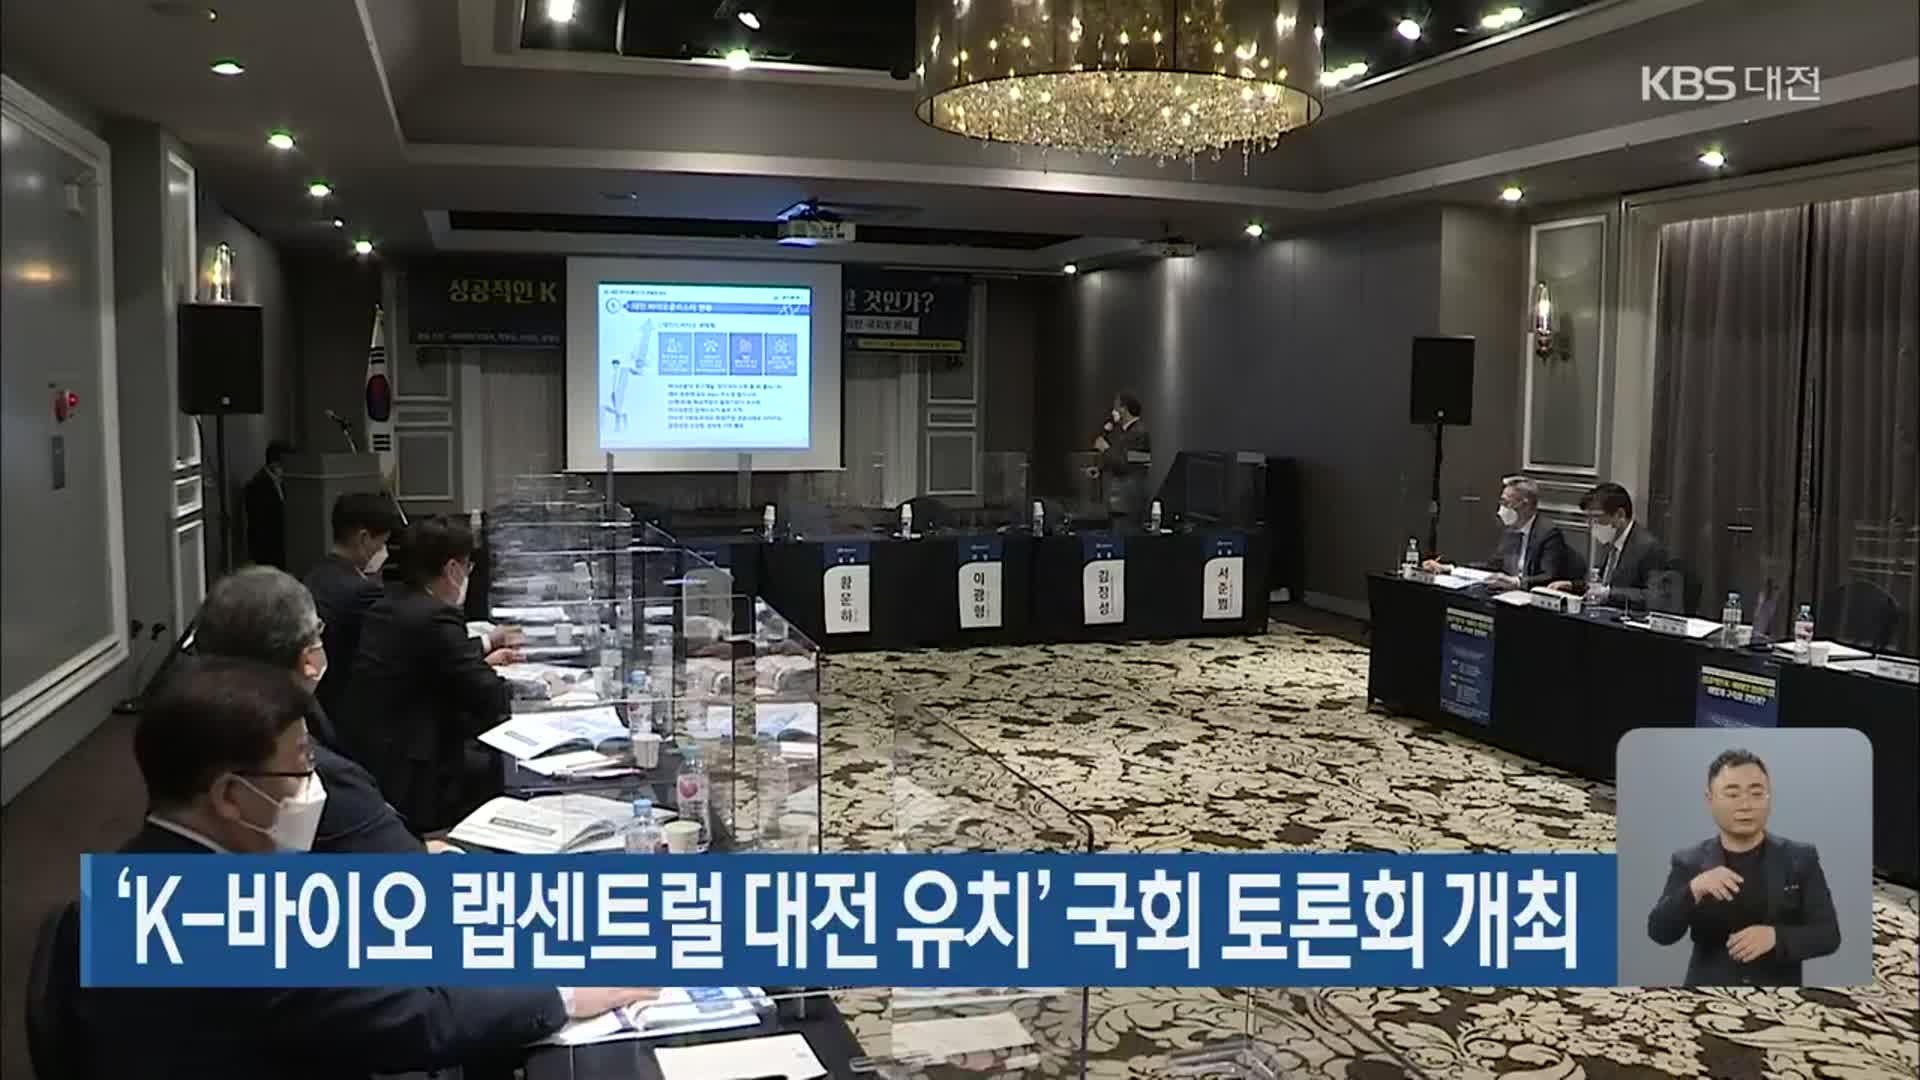 ‘K-바이오 랩센트럴 대전 유치’ 국회 토론회 개최